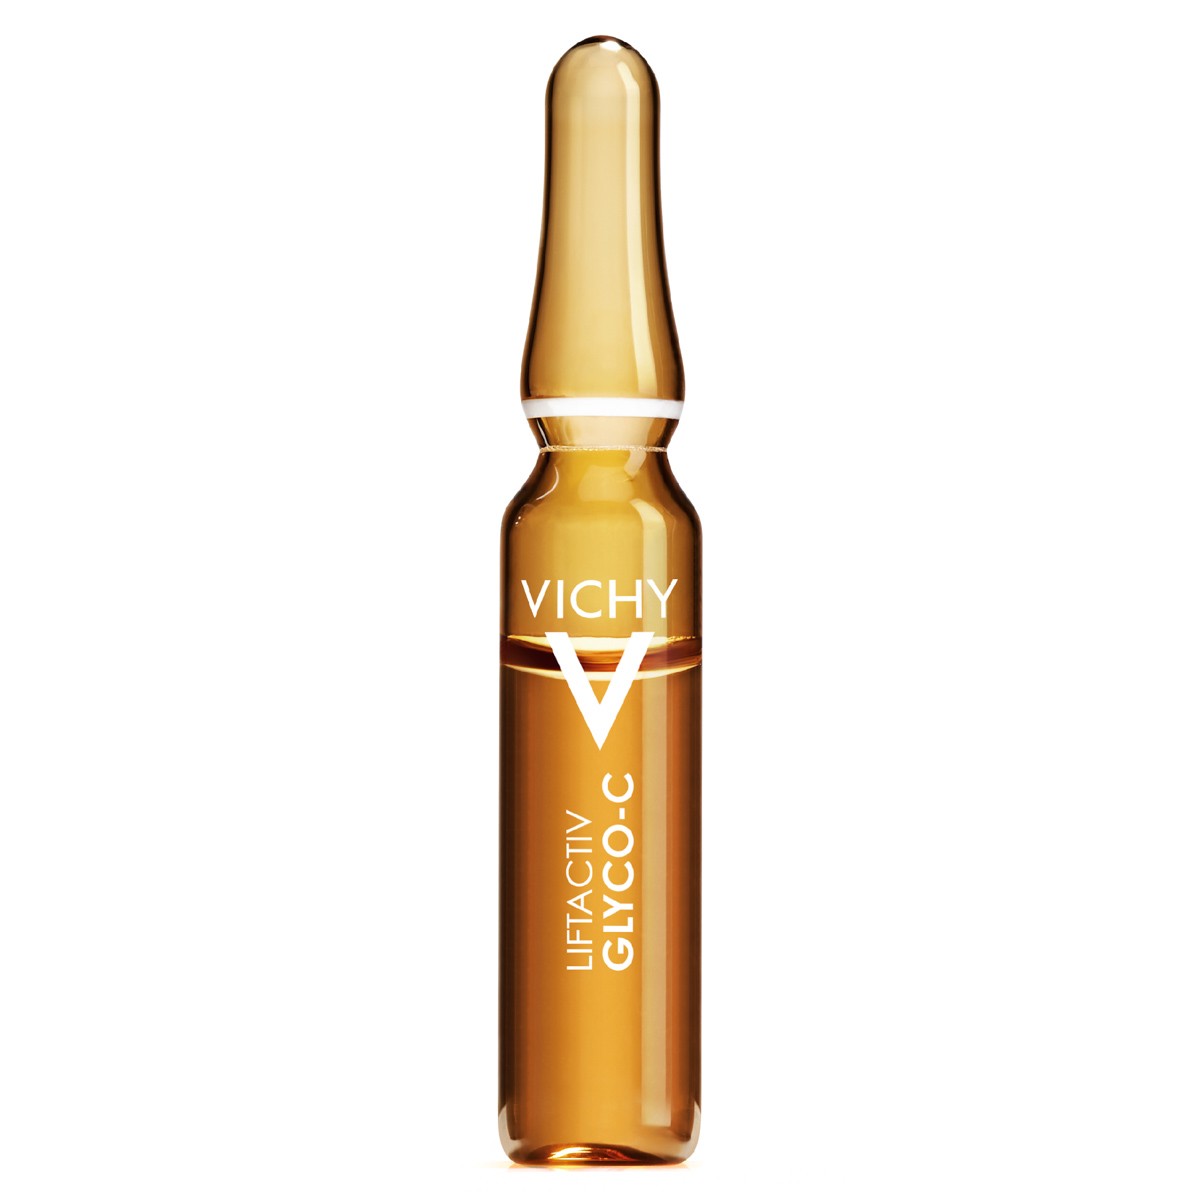 Vichy LIftactiv glyco-C antimanchas 30 ampollas